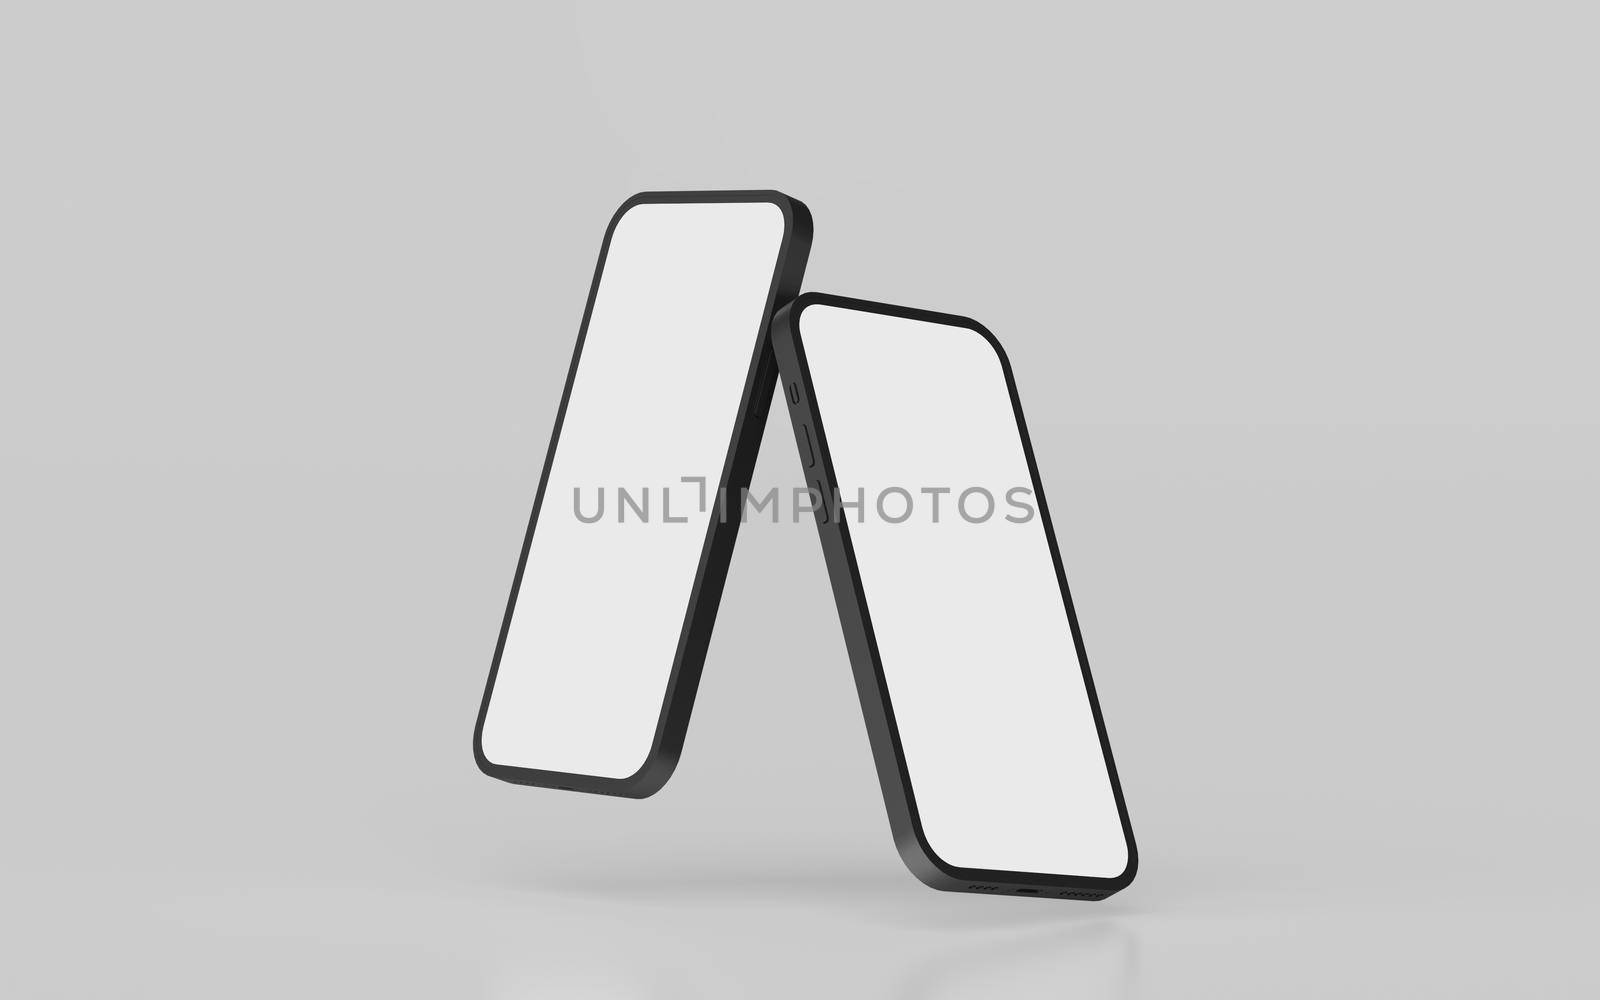 Minimal empty screen smartphone mockup on white background, 3d rendering by nutzchotwarut